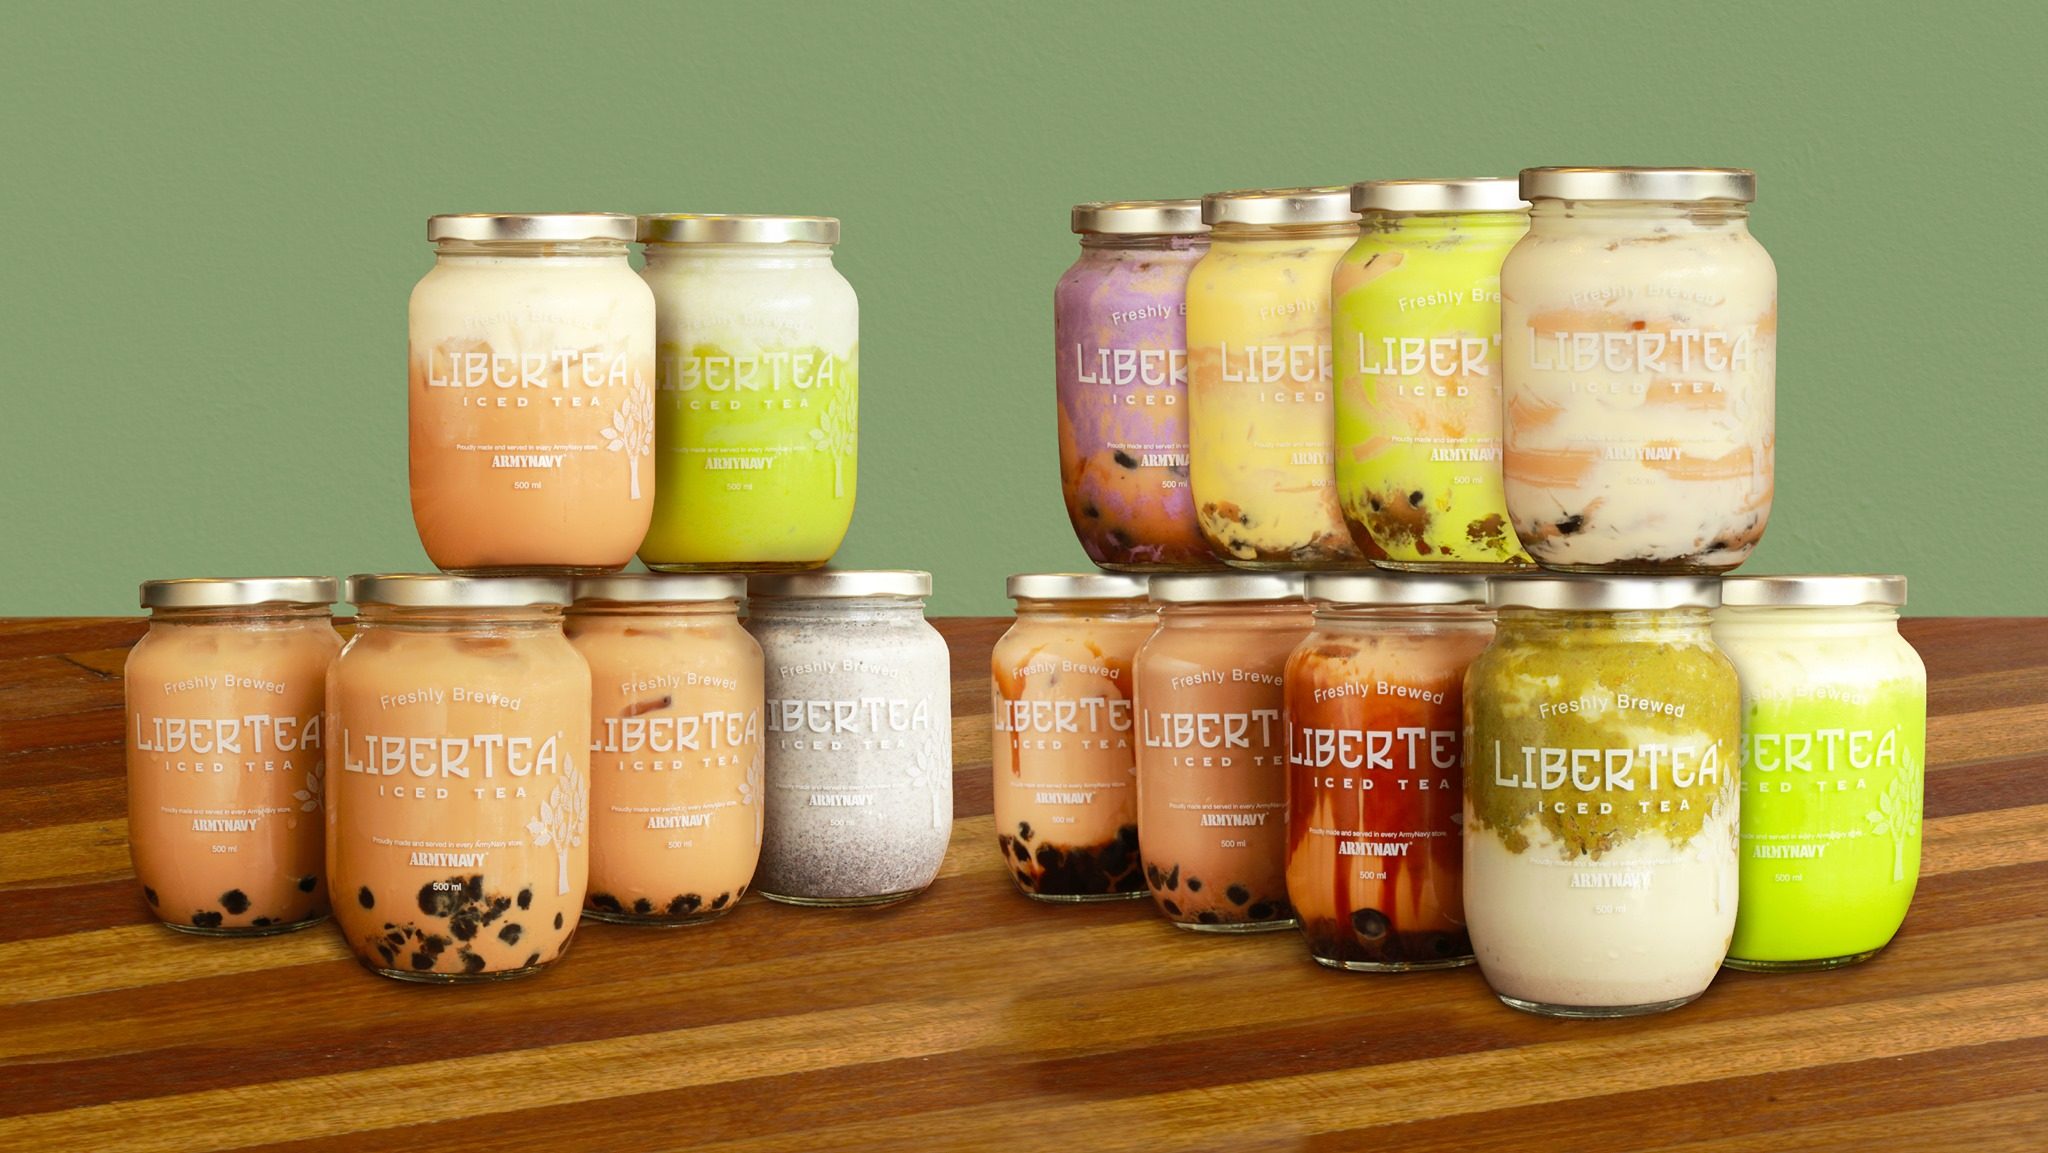 Army Navy launches 15 new LiberTea MilkTea flavors